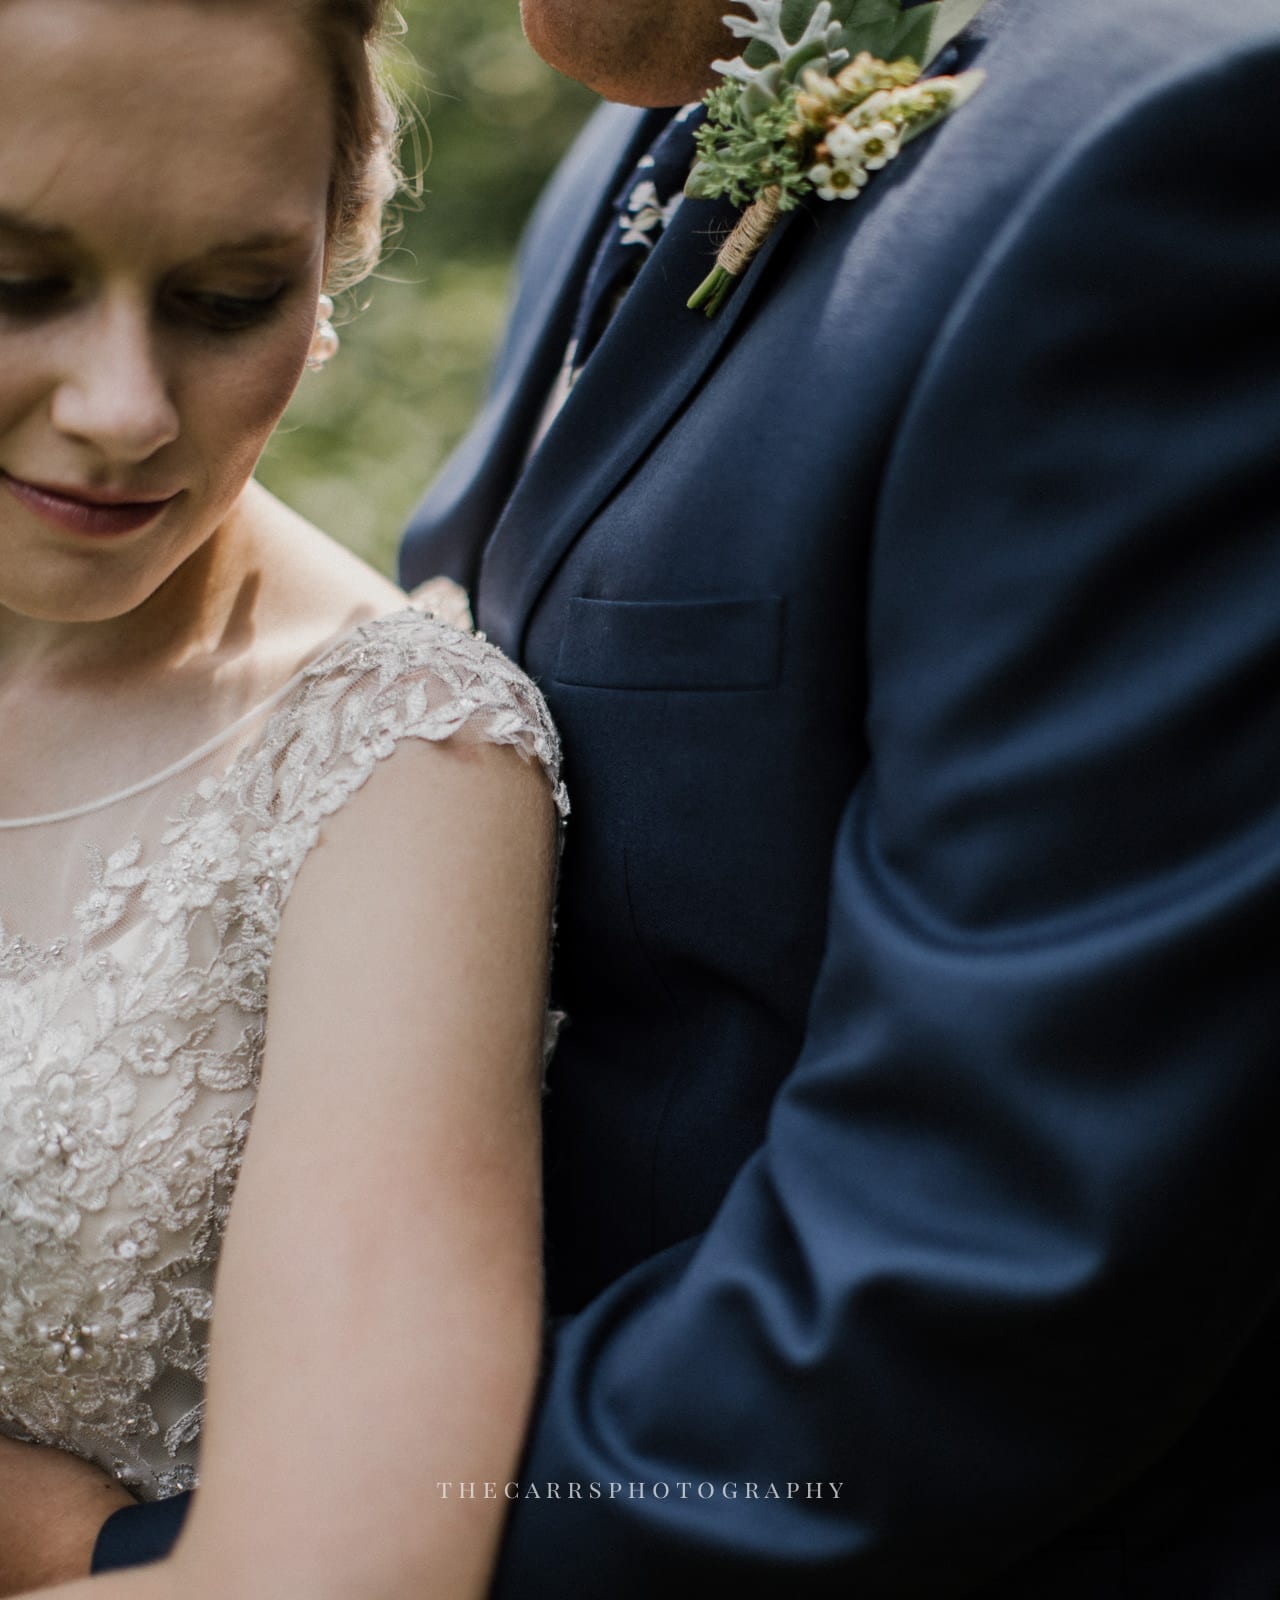 bride and groom embrace at Eckers Apple Farm Wedding - Destination Photographer